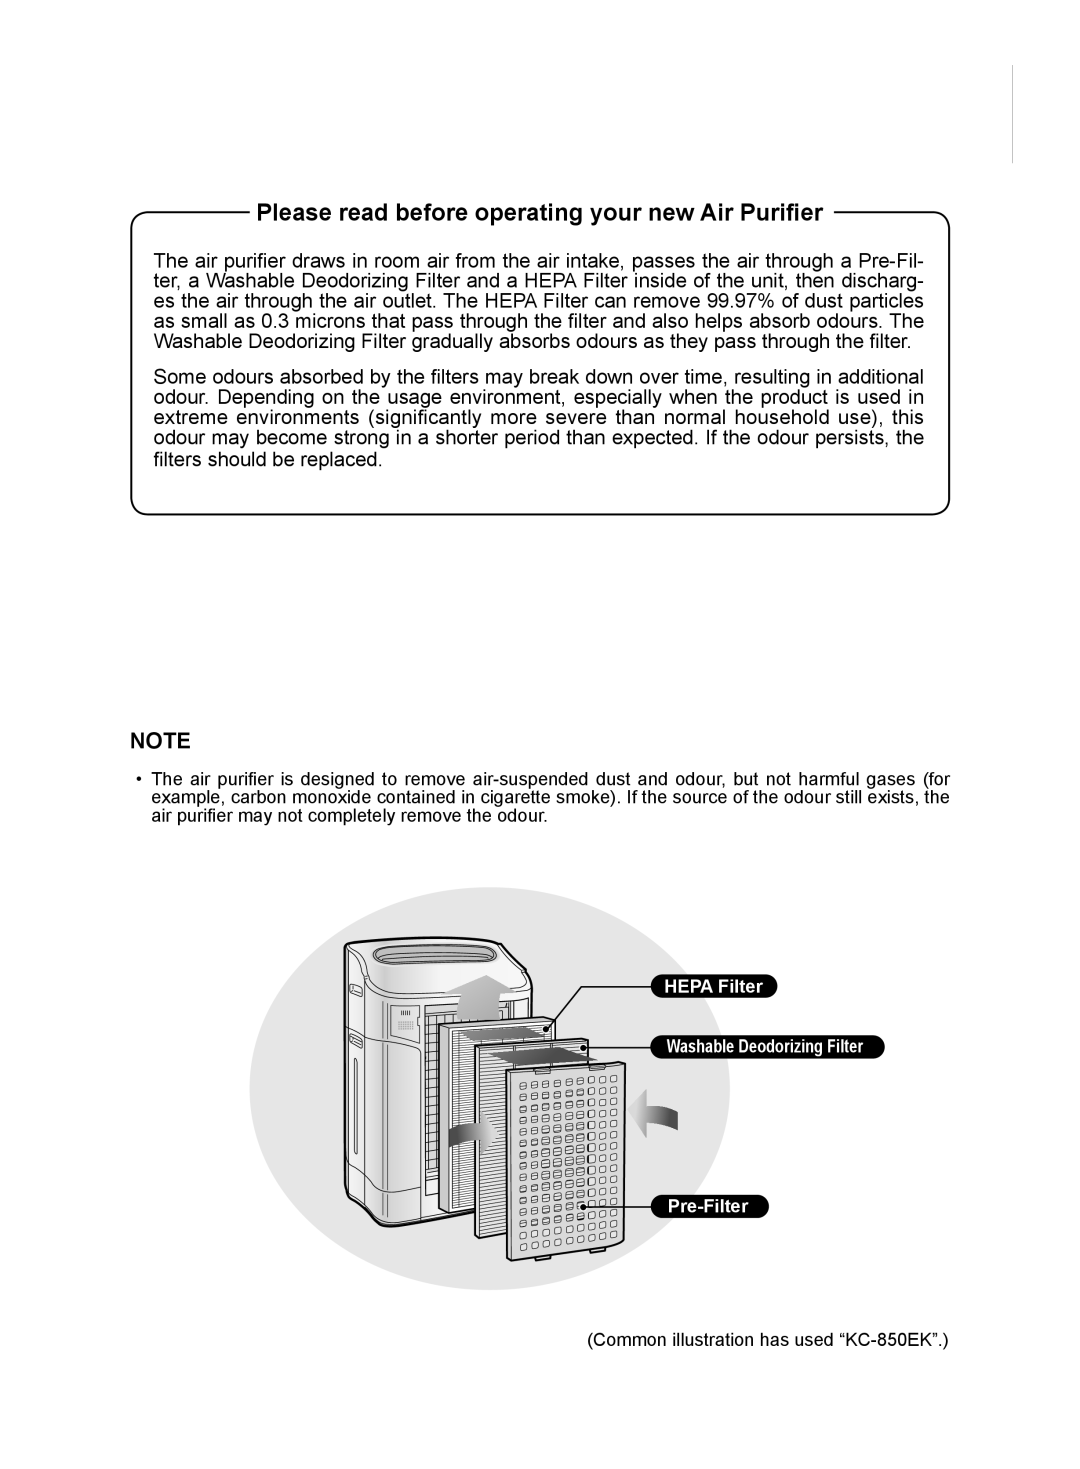 Sharp KC-860EK HEPA Filter Washable Deodorizing Filter, Pre-Filter, Common illustration has used “KC-850EK” 